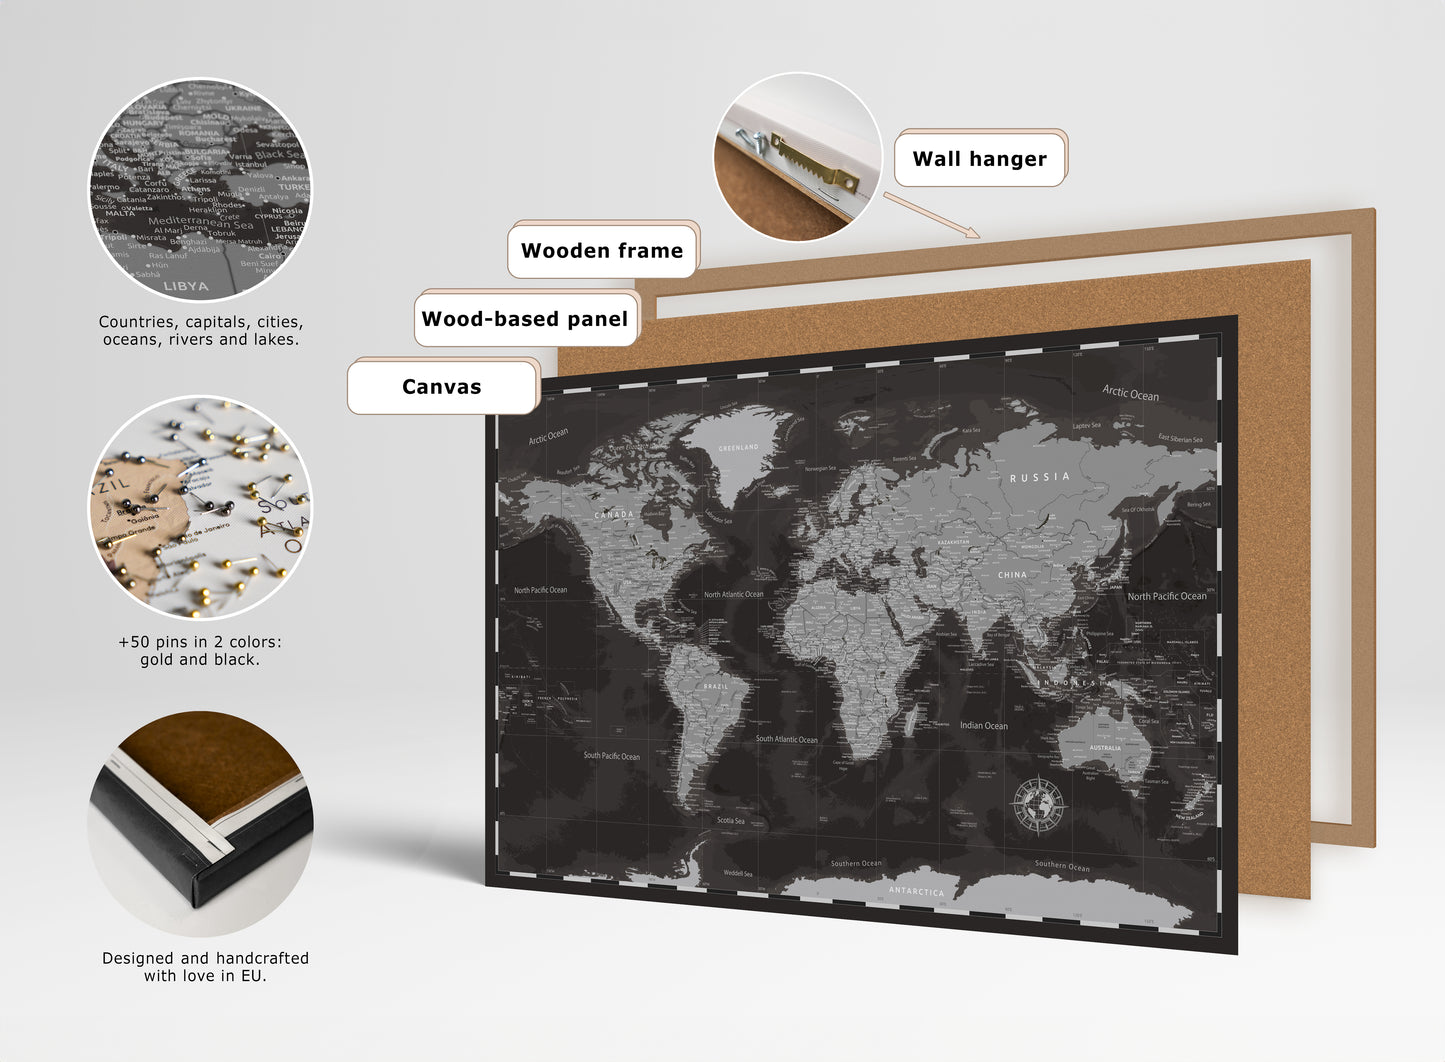 Personalized World Map on Canvas Pushpins Pinboard - Metalic